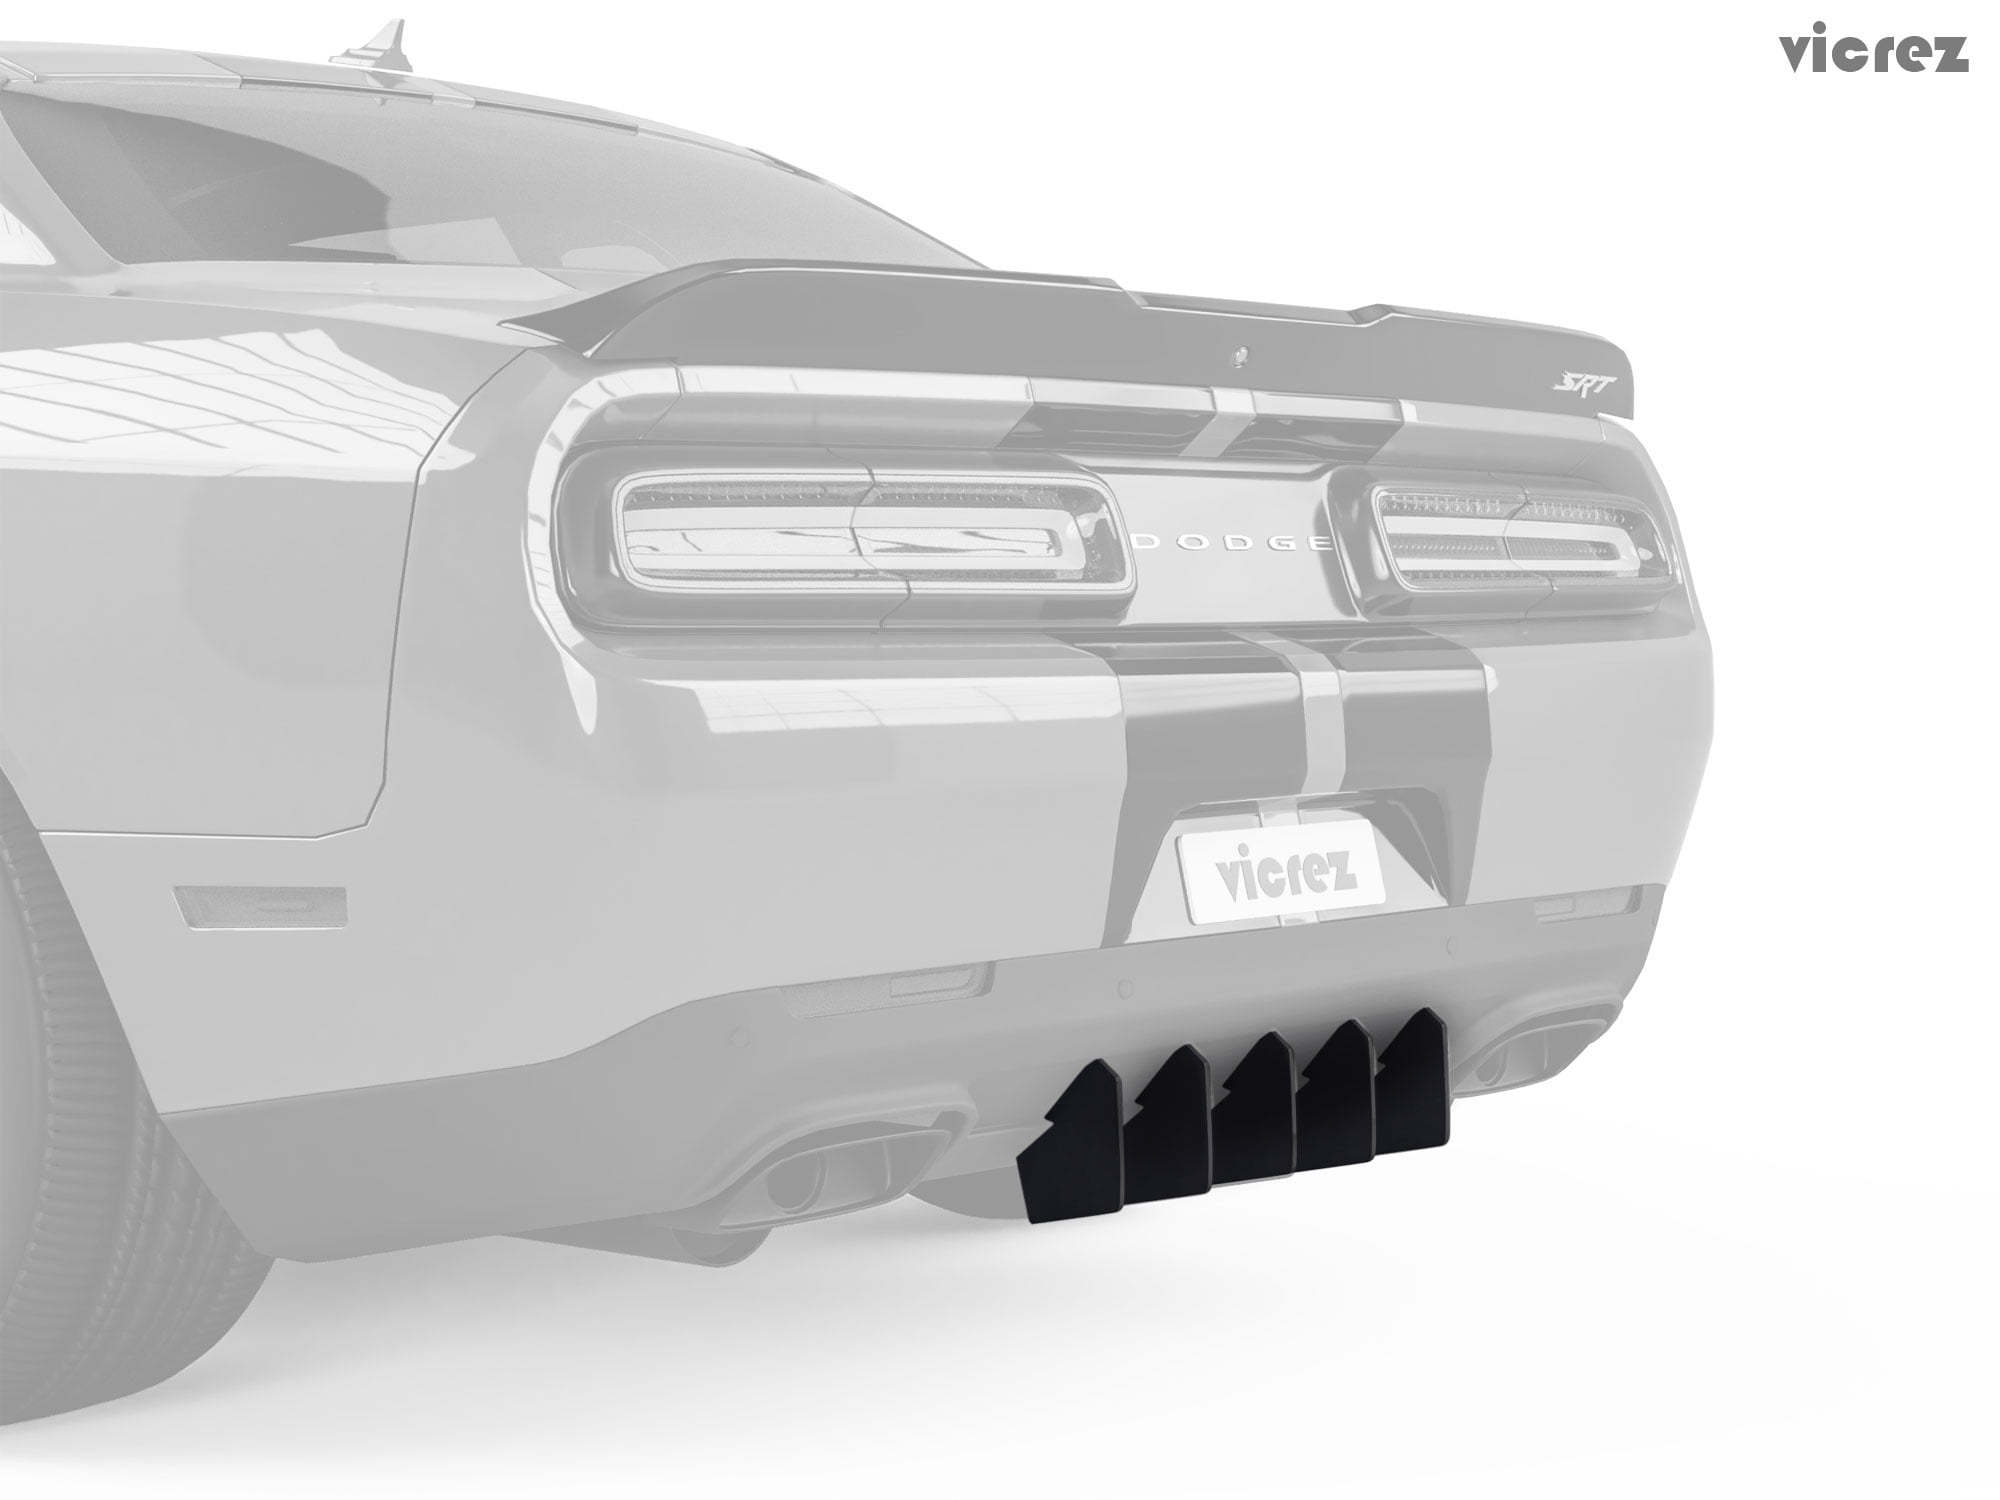 Vicrez Dodge Rear Diffuser Add-on LV Style vz101061 for Dodge Challenger SRT Hellcat 2015-2019 